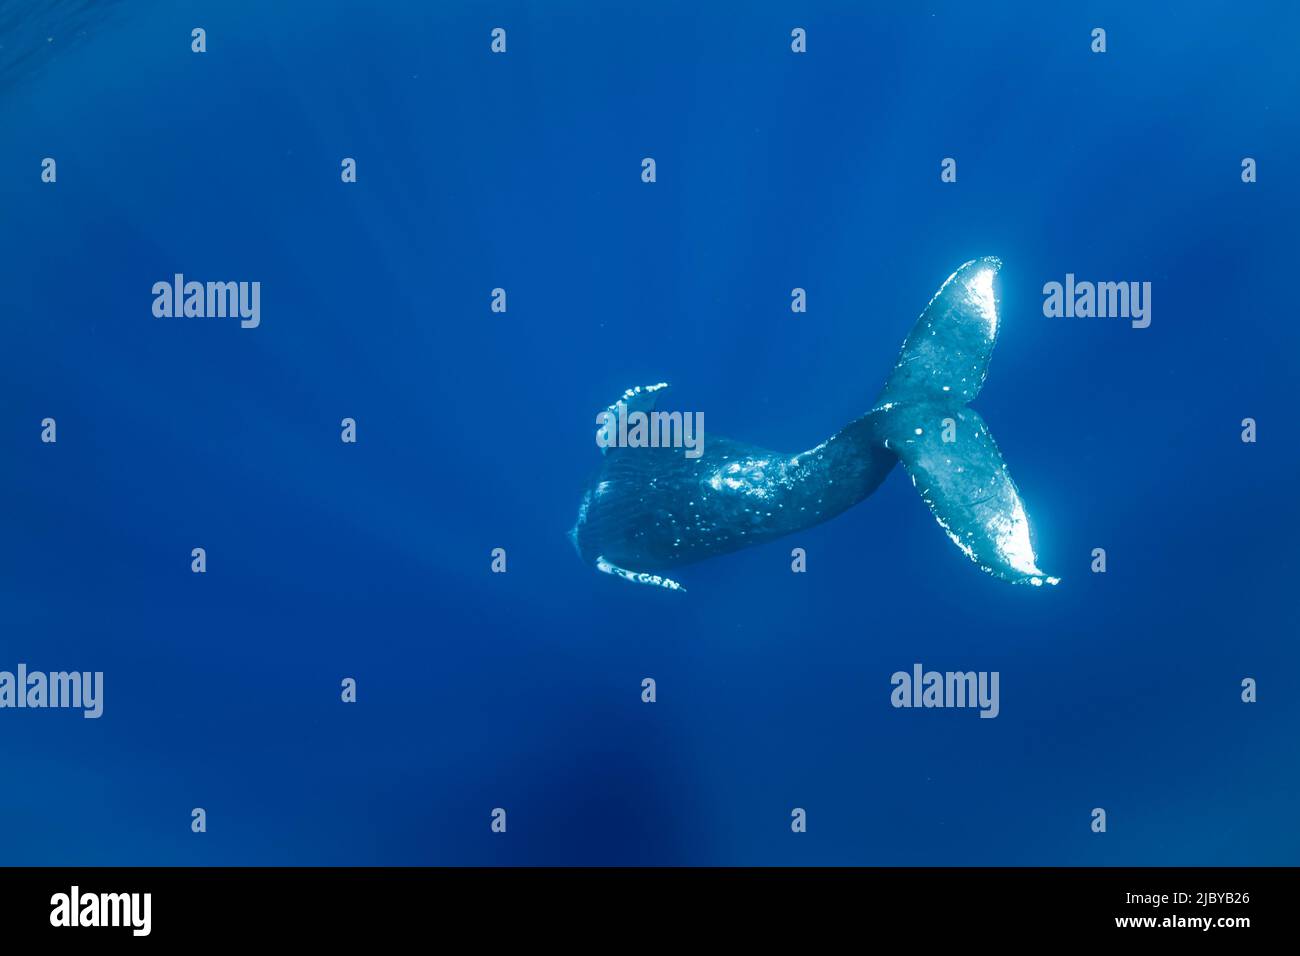 Foto submarina, ballena (Megaptera novaeangliae) descendiendo hacia el azul profundo, Maui, Hawaii Foto de stock